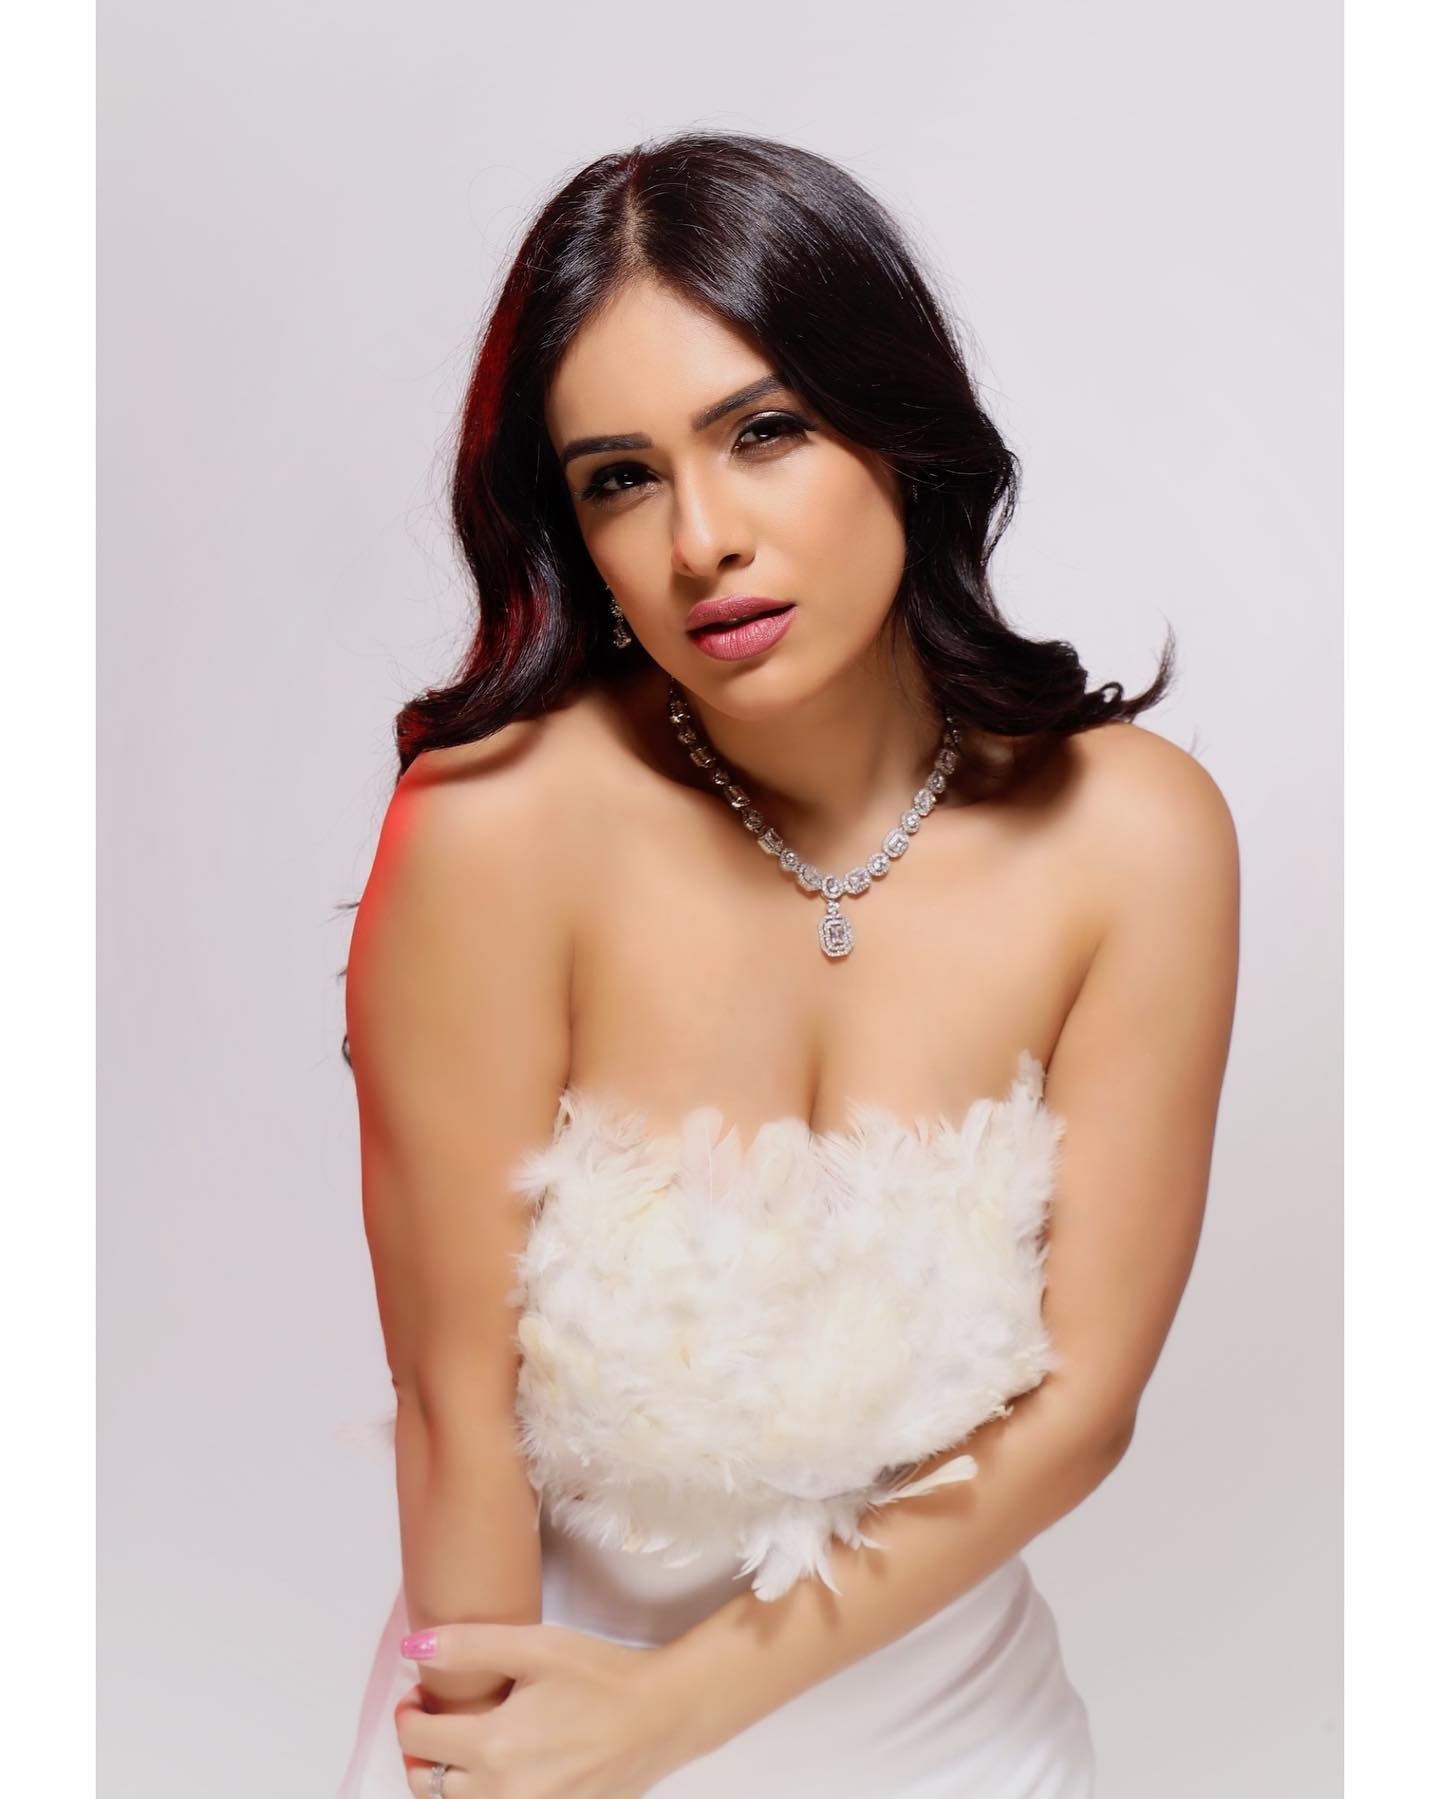 10 steamy pics of Neha Malik (6)